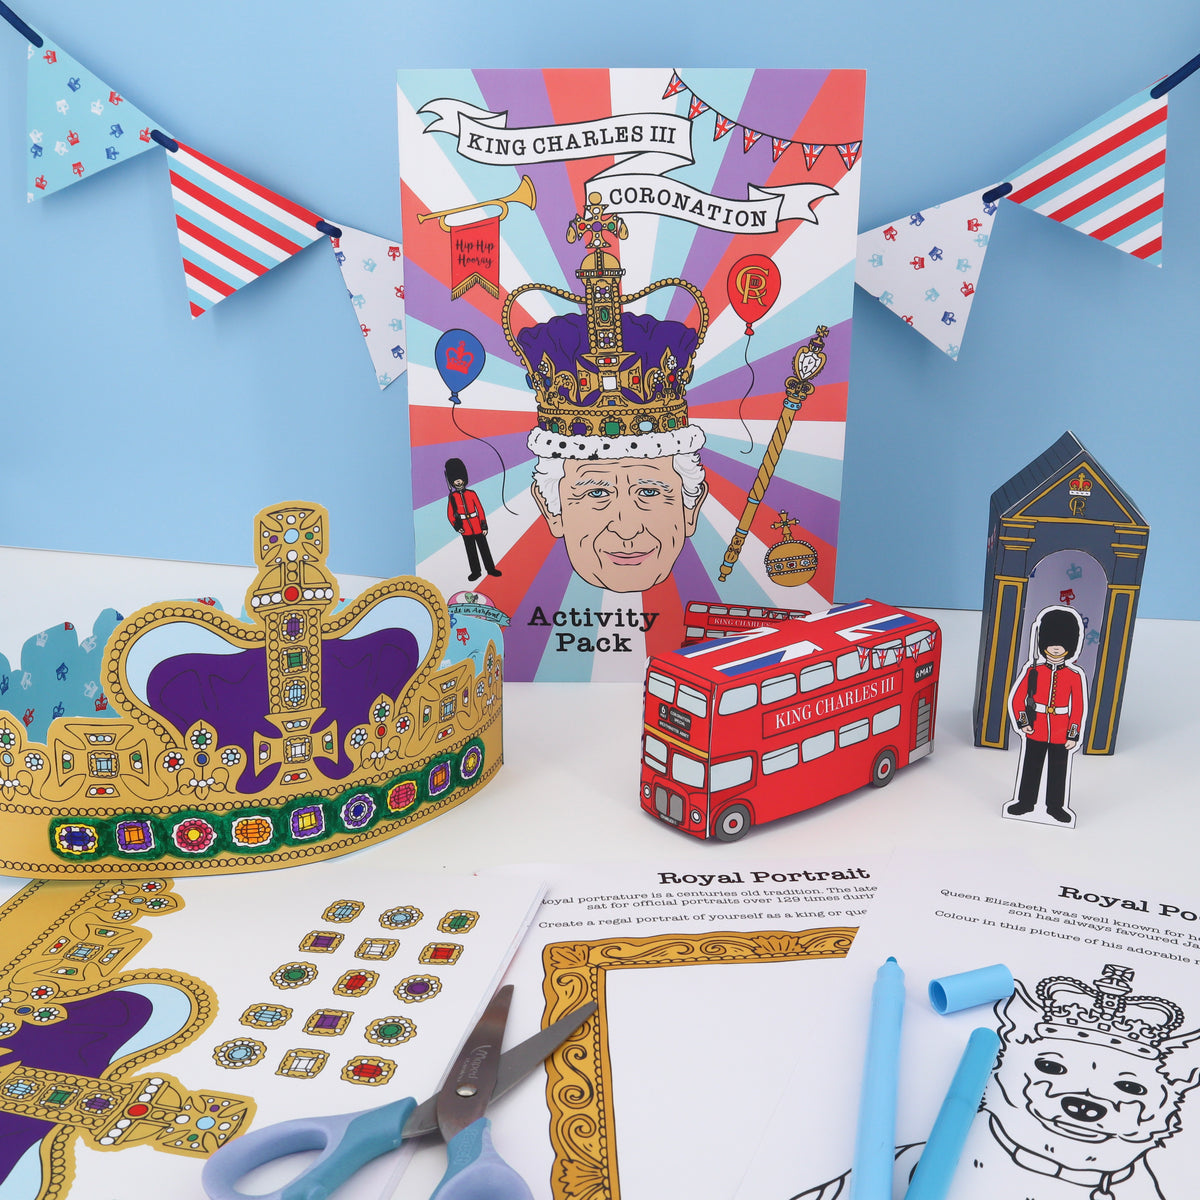 King Charles III Coronation Activity Pack FREE Printable – Made in Ashford